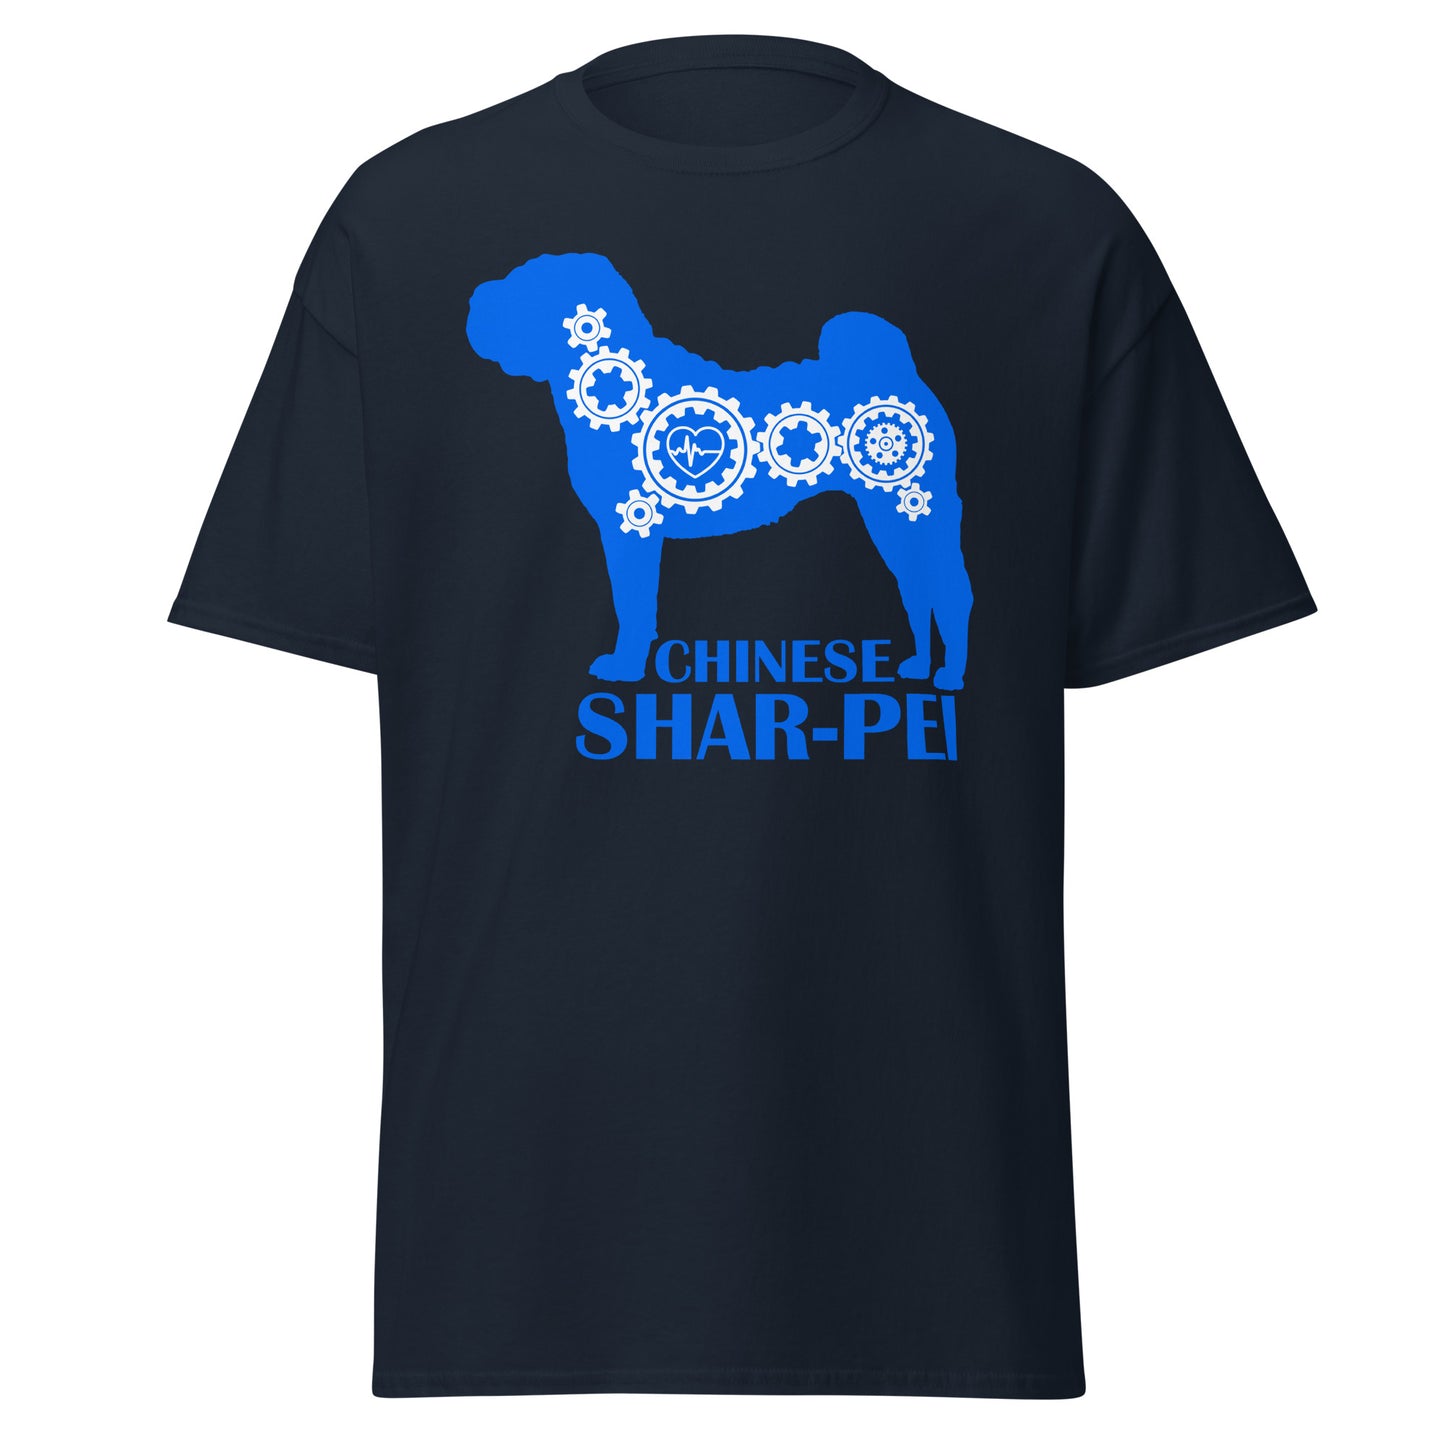 Chinese Shar-Pei Bionic men’s navy t-shirt by Dog Artistry.